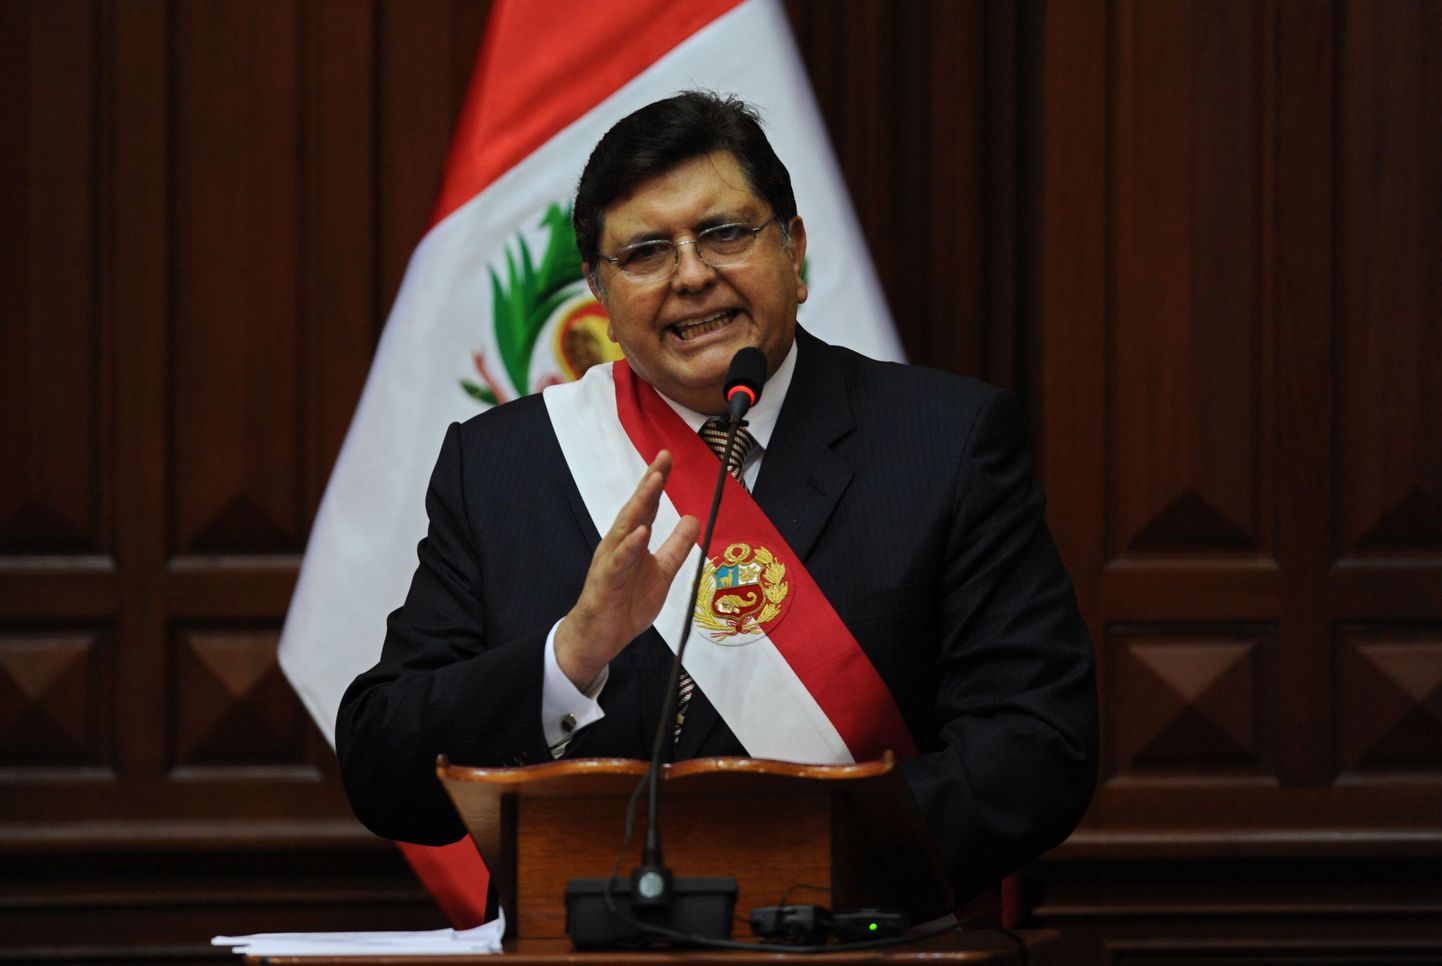 Peruu president Alan Garcia.